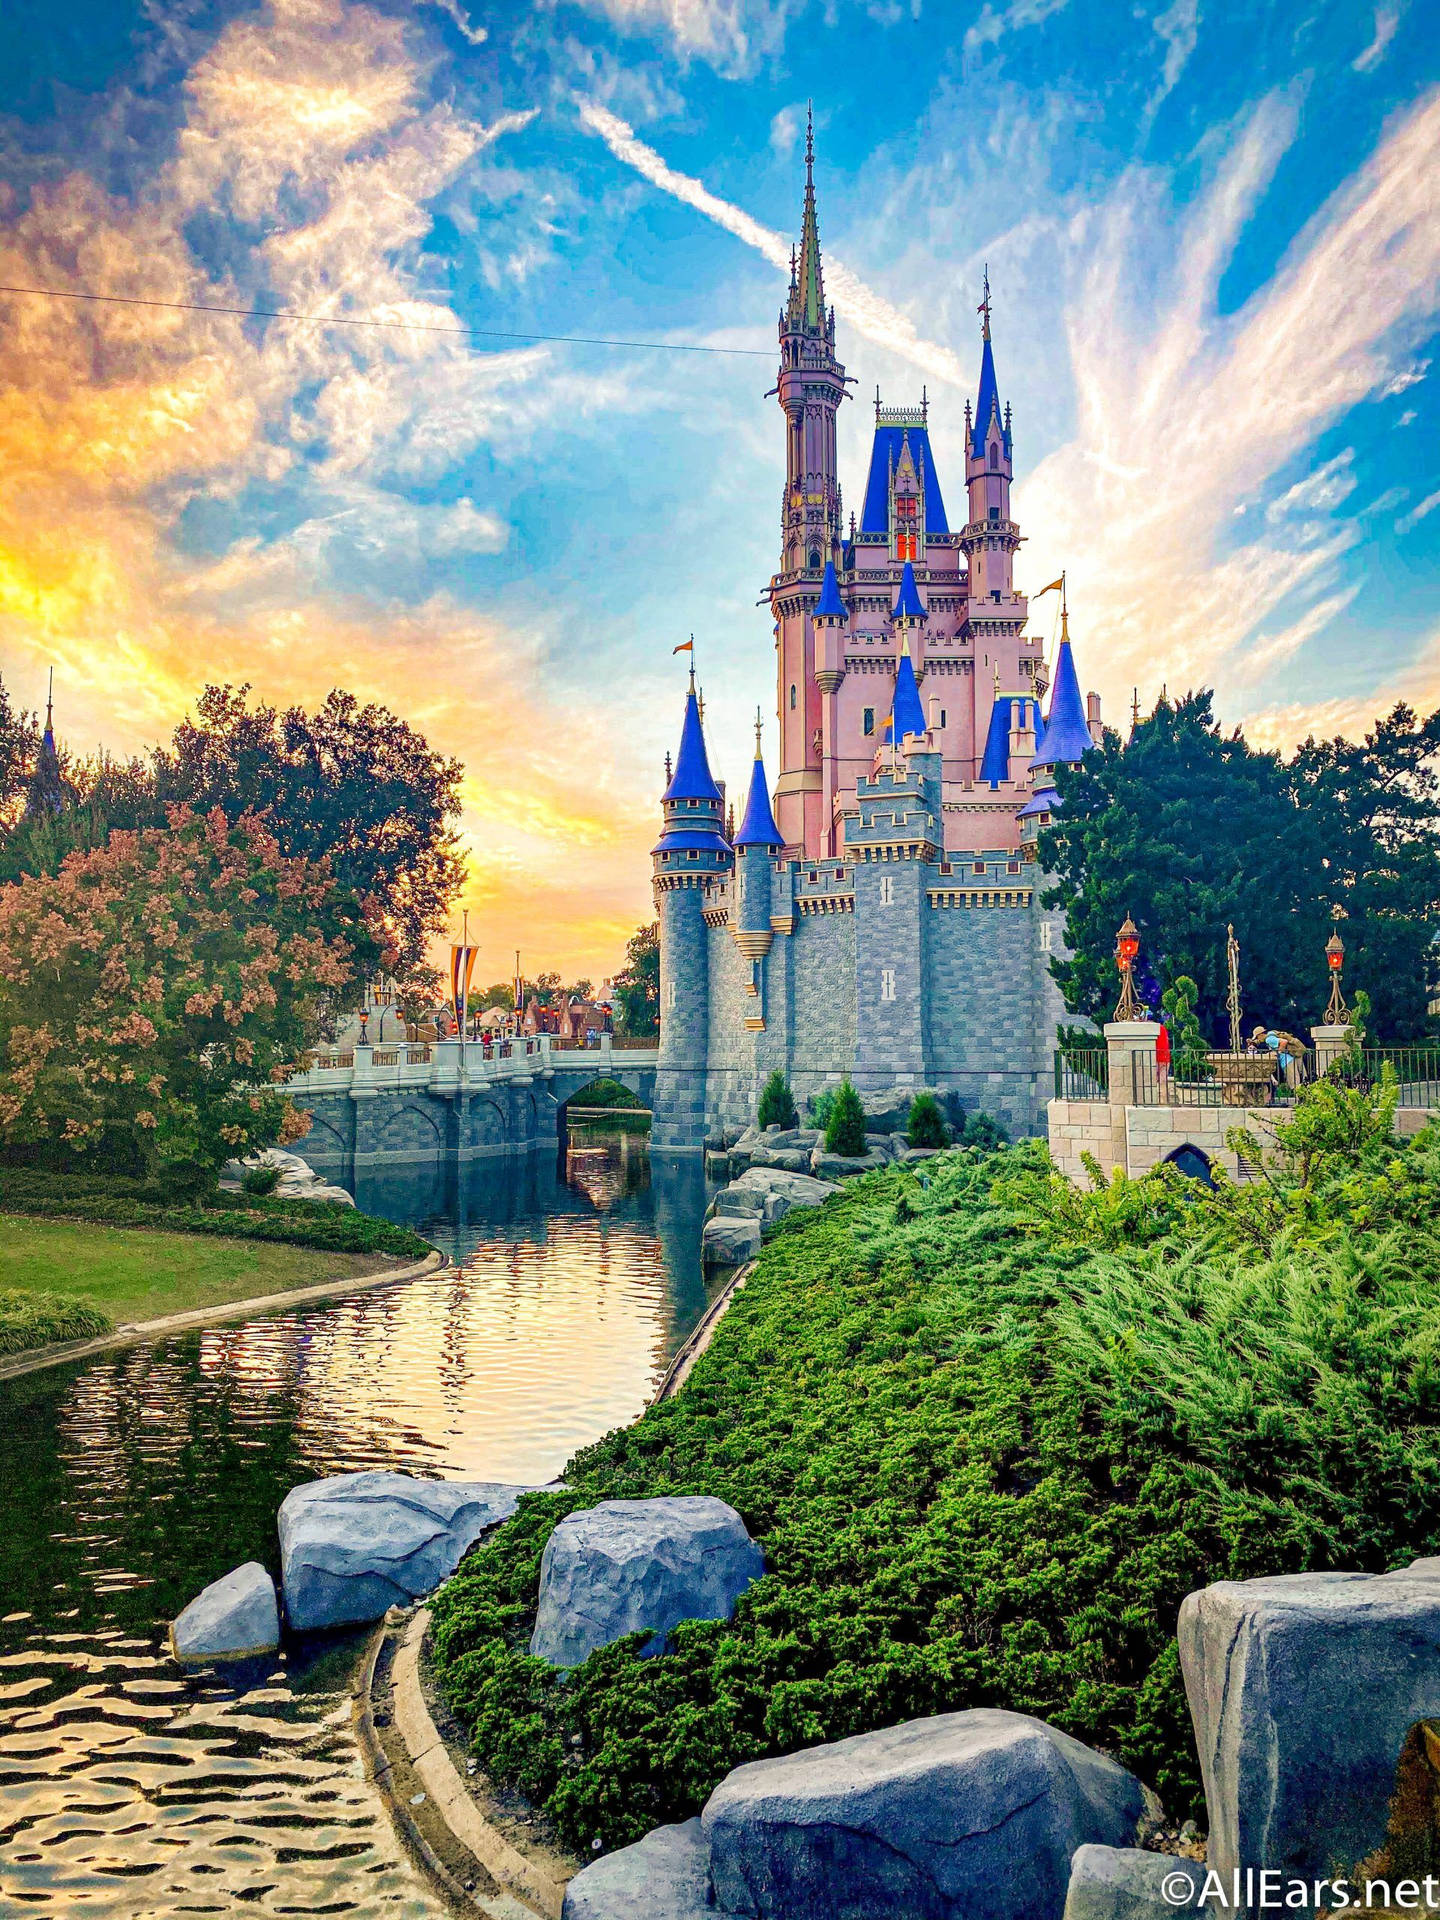 Enchanting Day Disney Castle Wallpaper